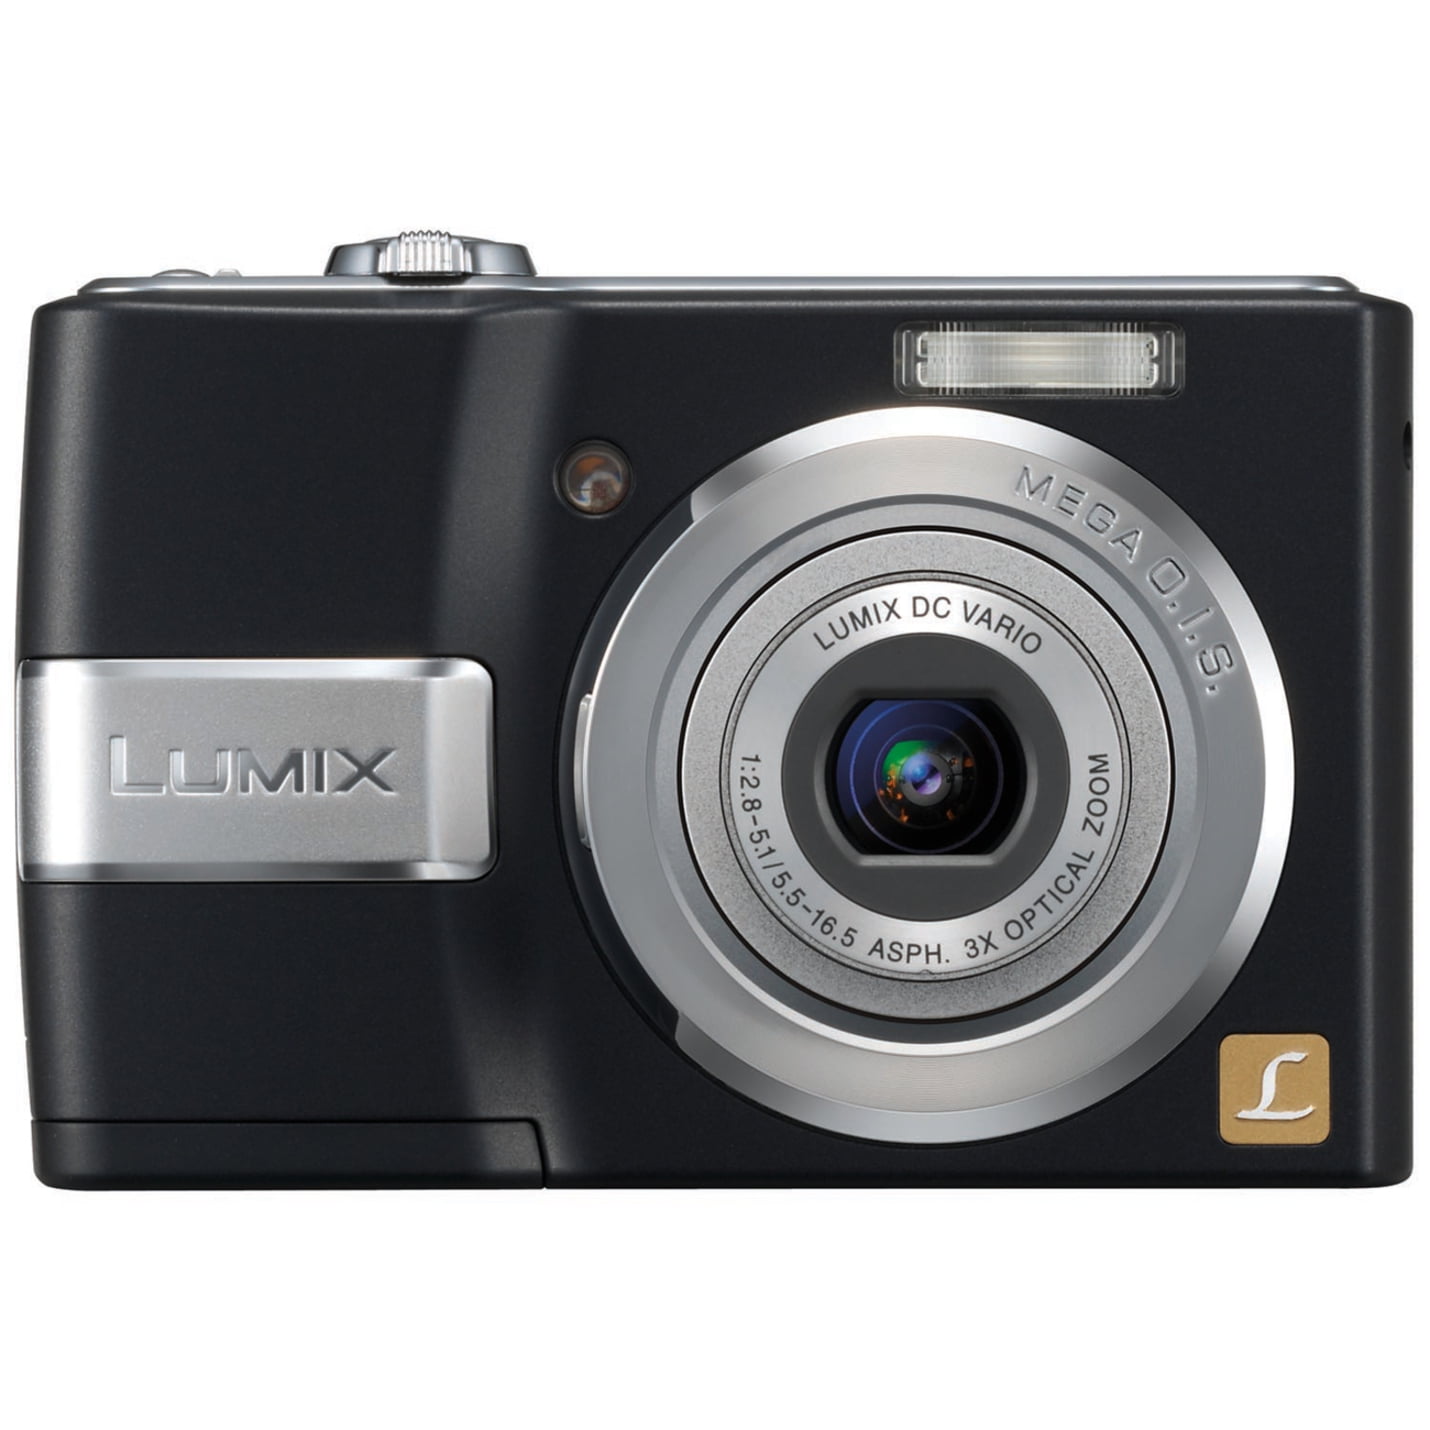 Verrijking Delegeren Onmiddellijk Panasonic Lumix DMC-LS80 8.1 Megapixel Compact Camera, Black - Walmart.com